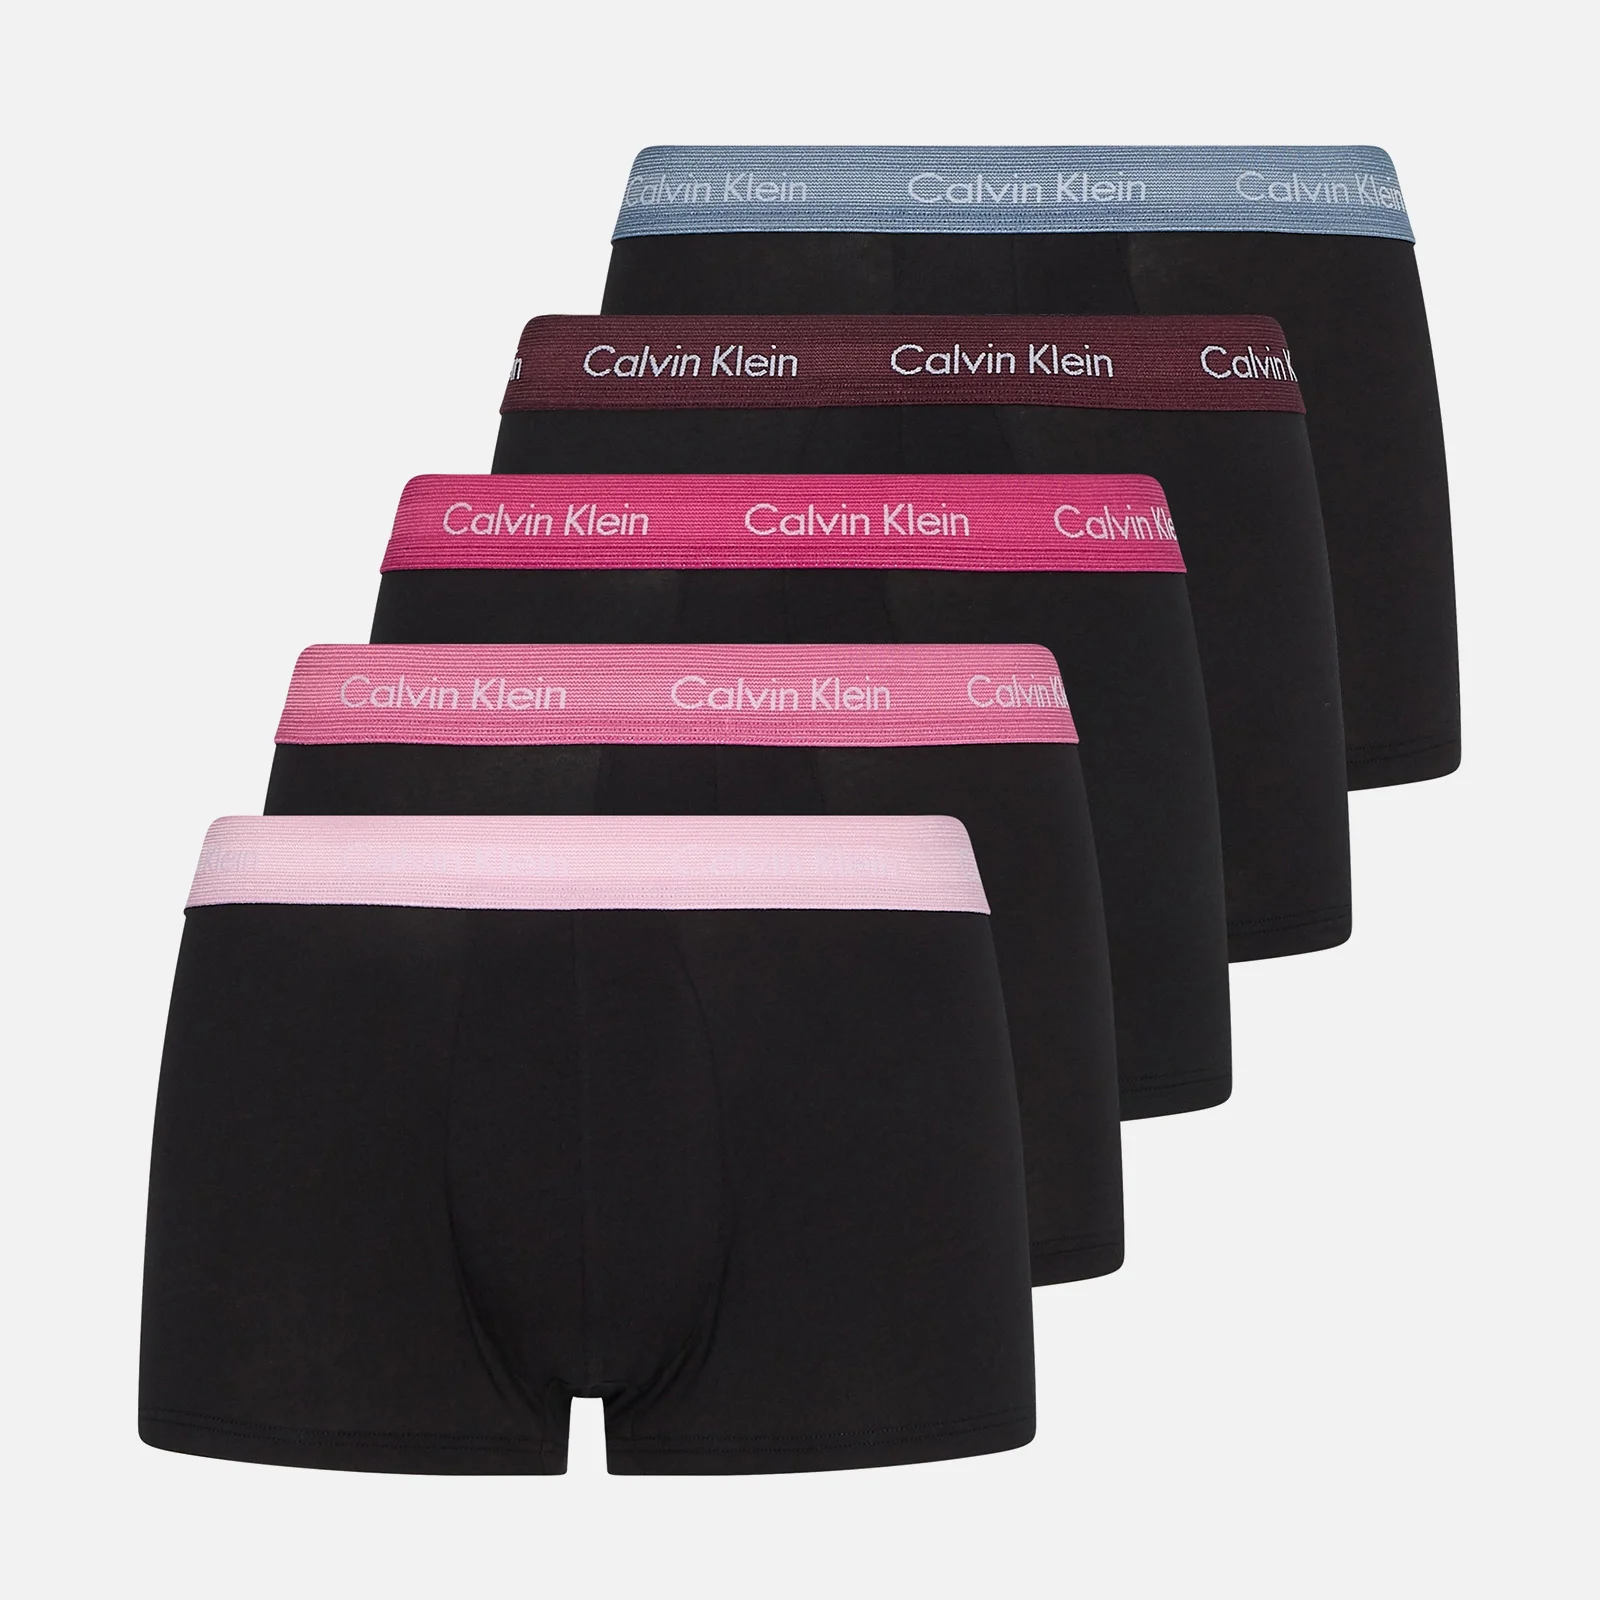 Calvin Klein Men's 5 Pack Low Rise Trunk Boxer Shorts - Black/Multi Image 1